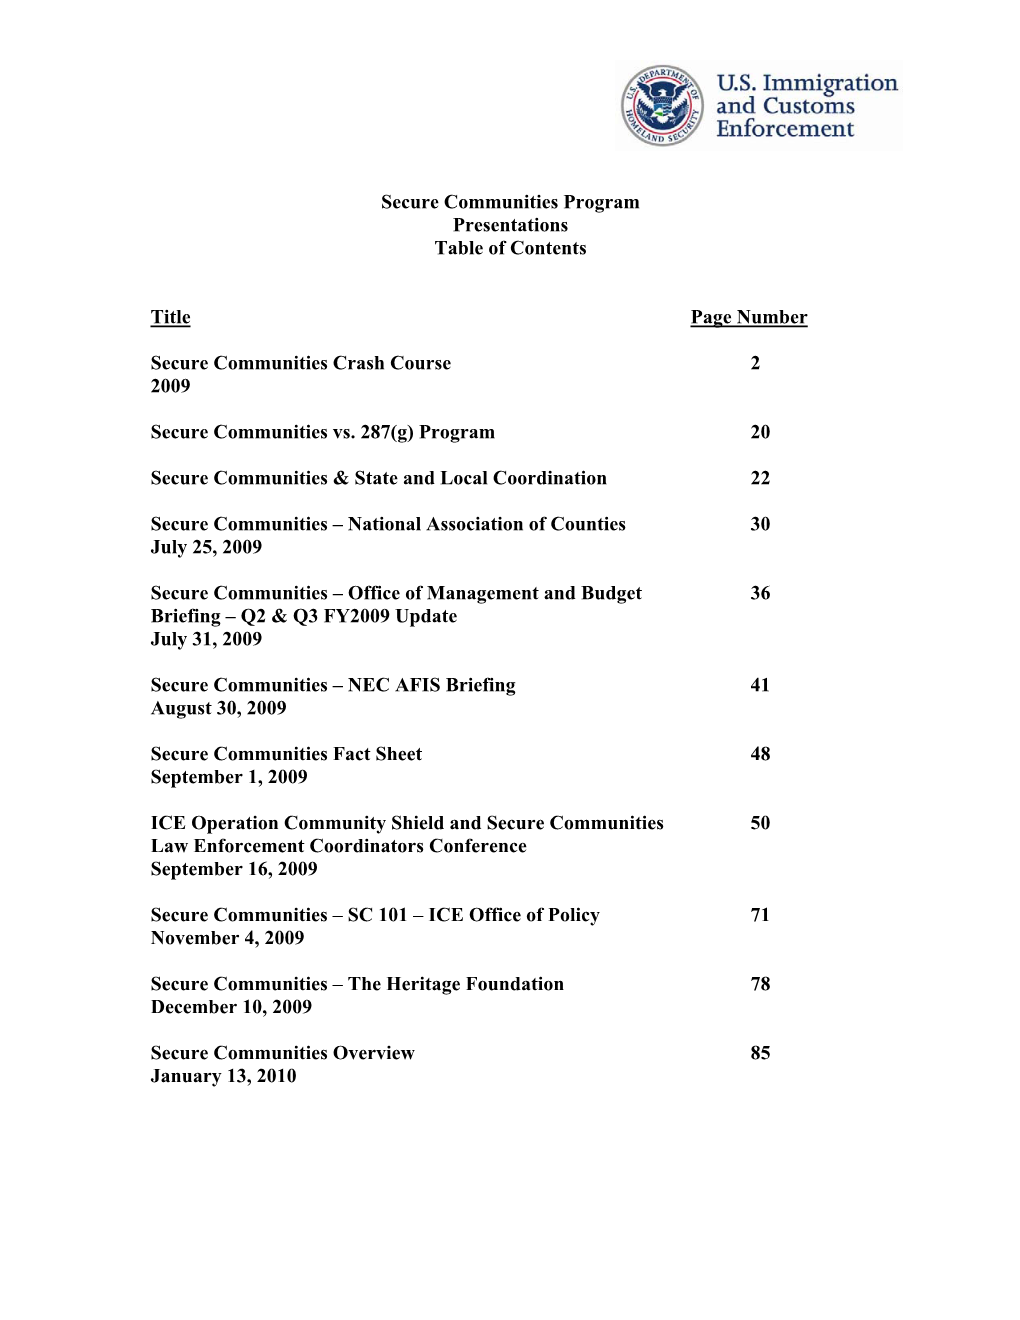 Secure Communities Program Presentations Table of Contents